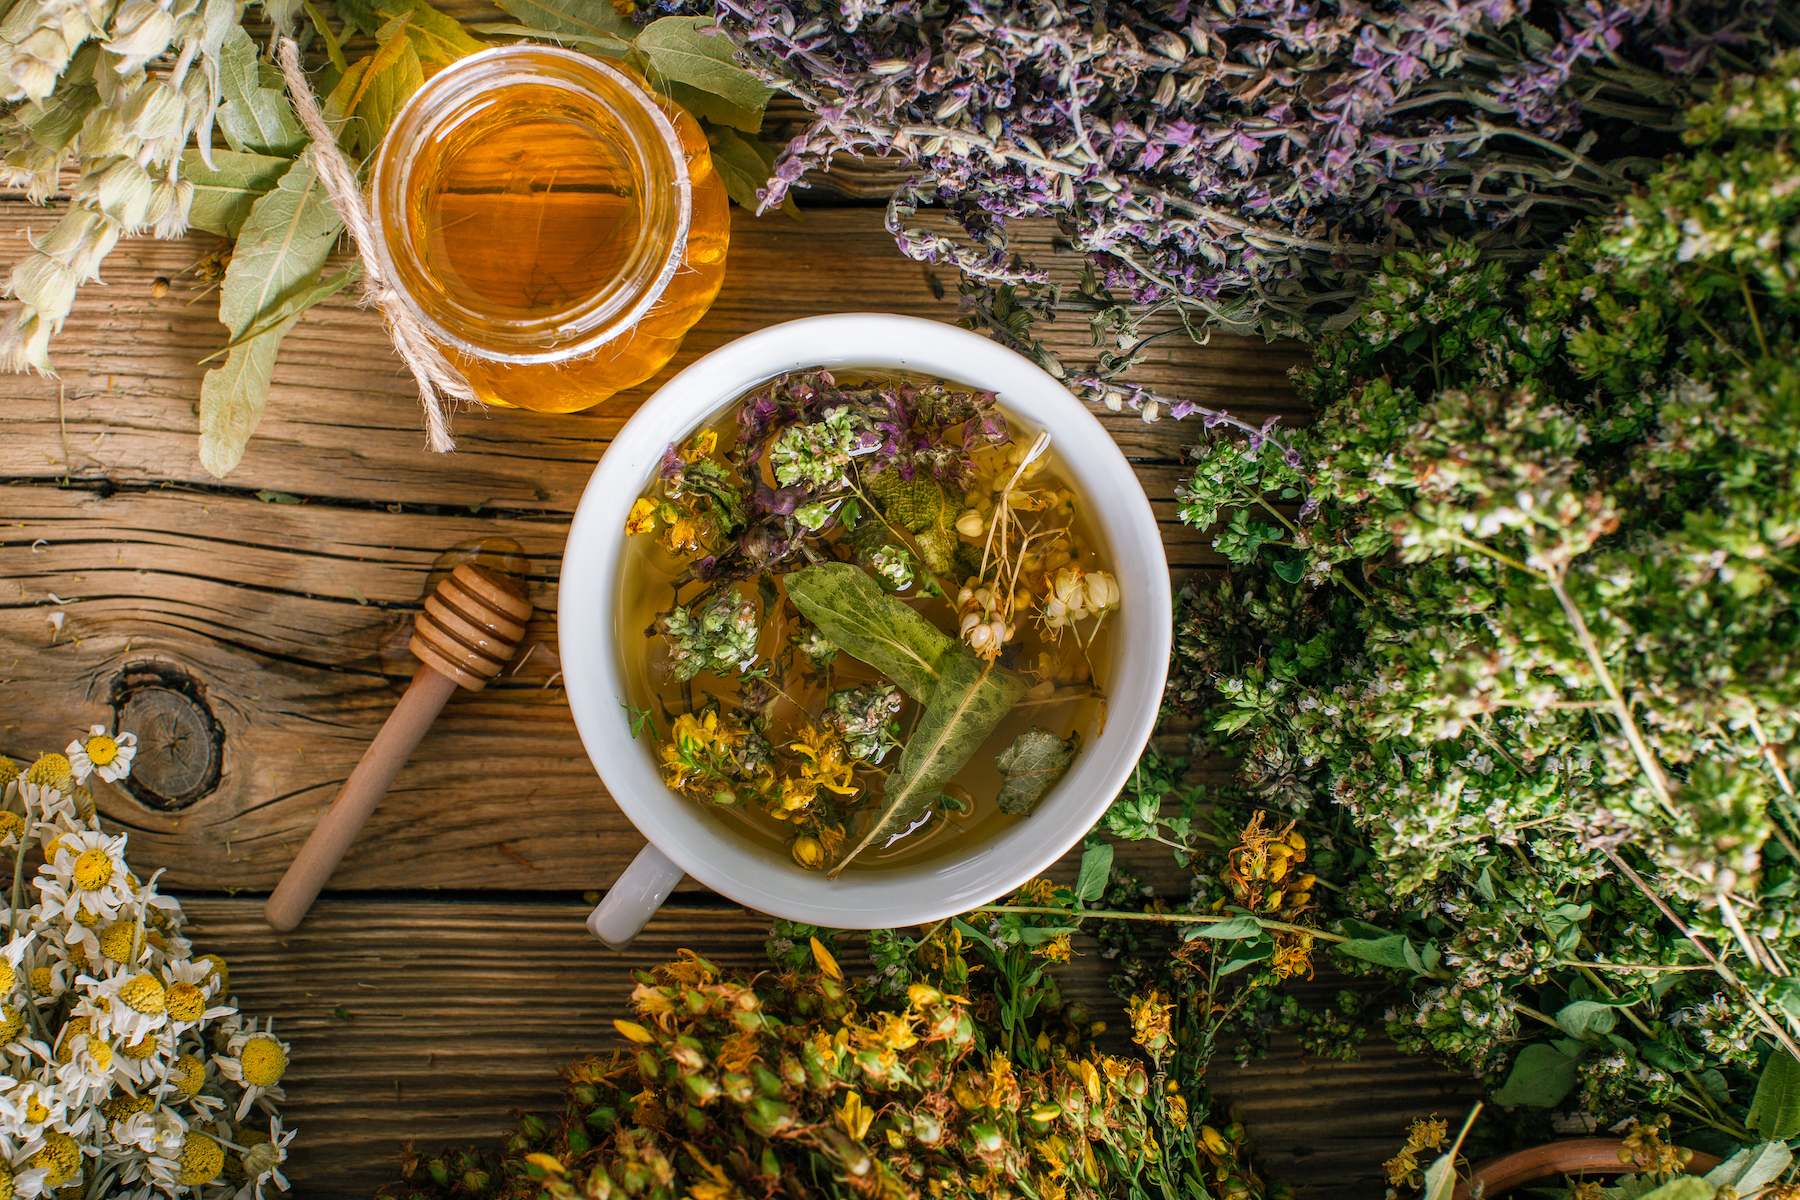 5 Easy Herbs to Grow & Use for Tea